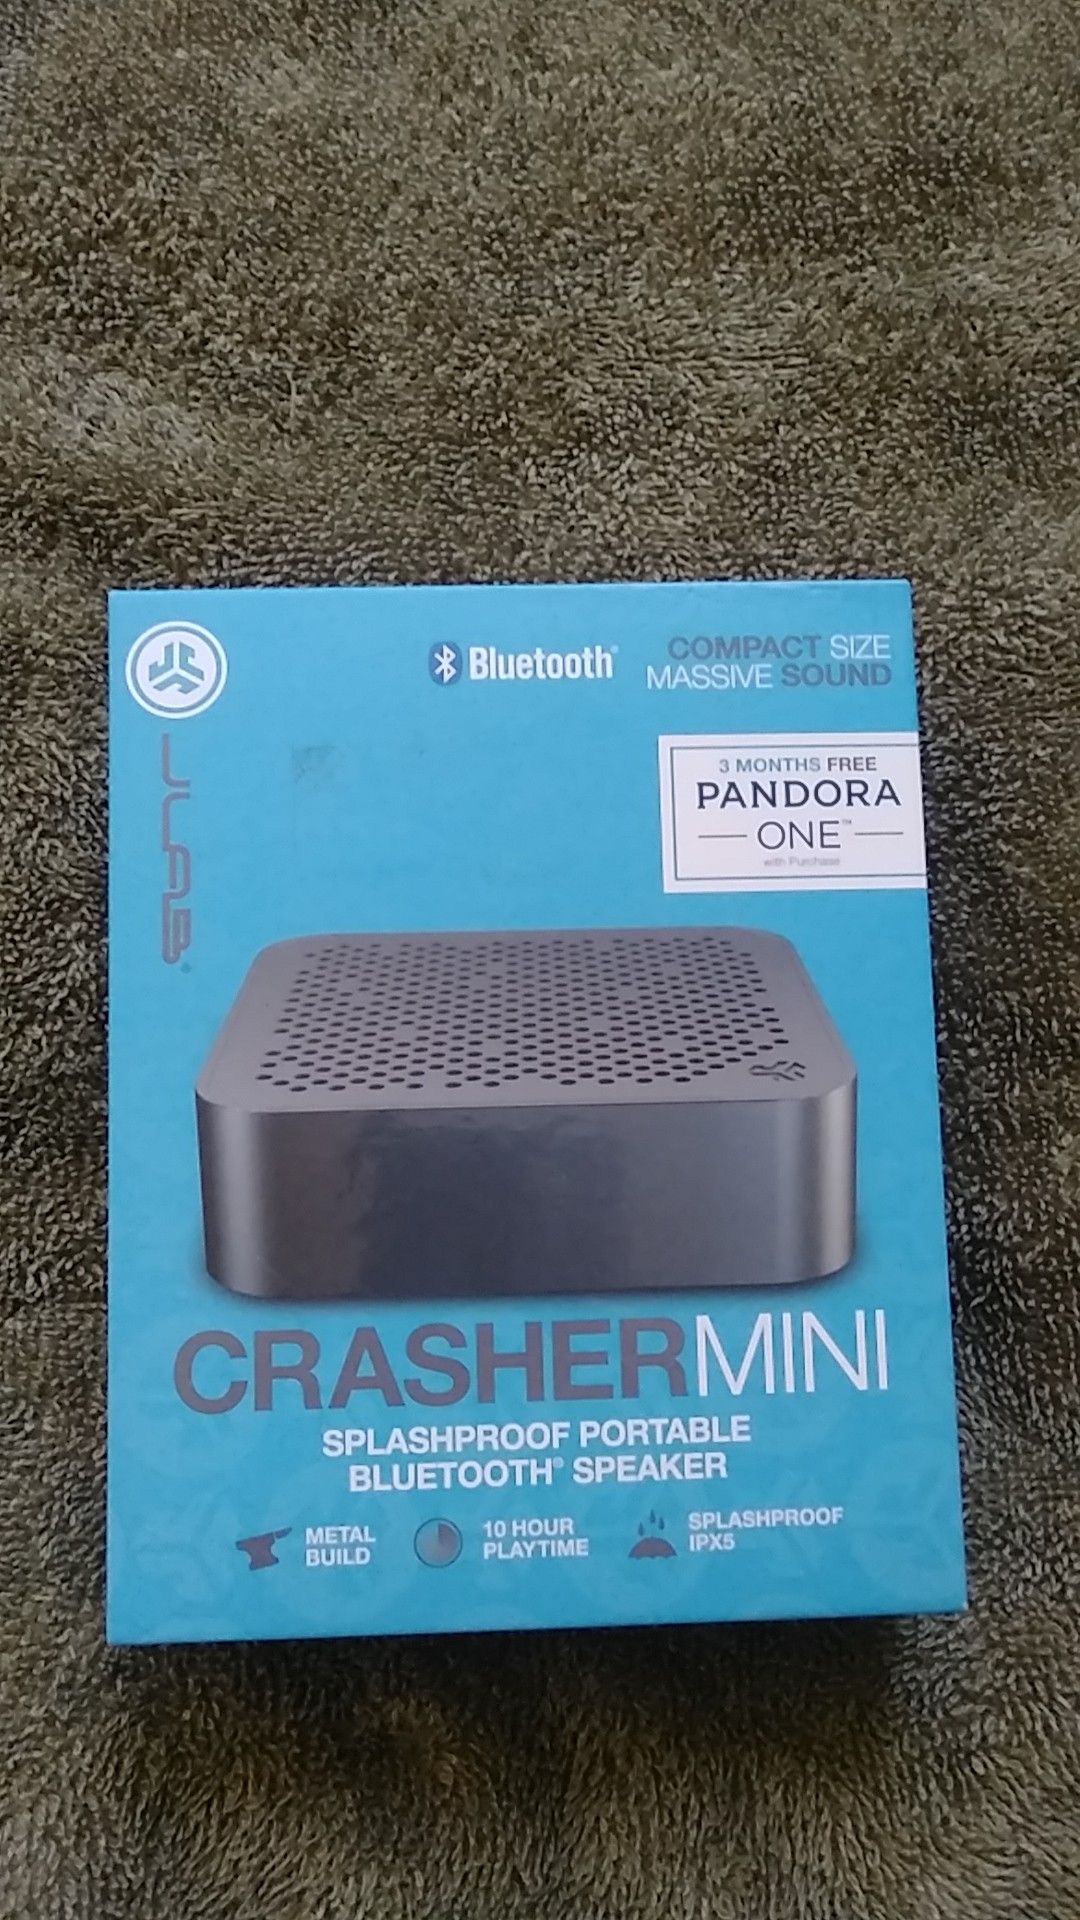 Brand new Bluetooth speaker